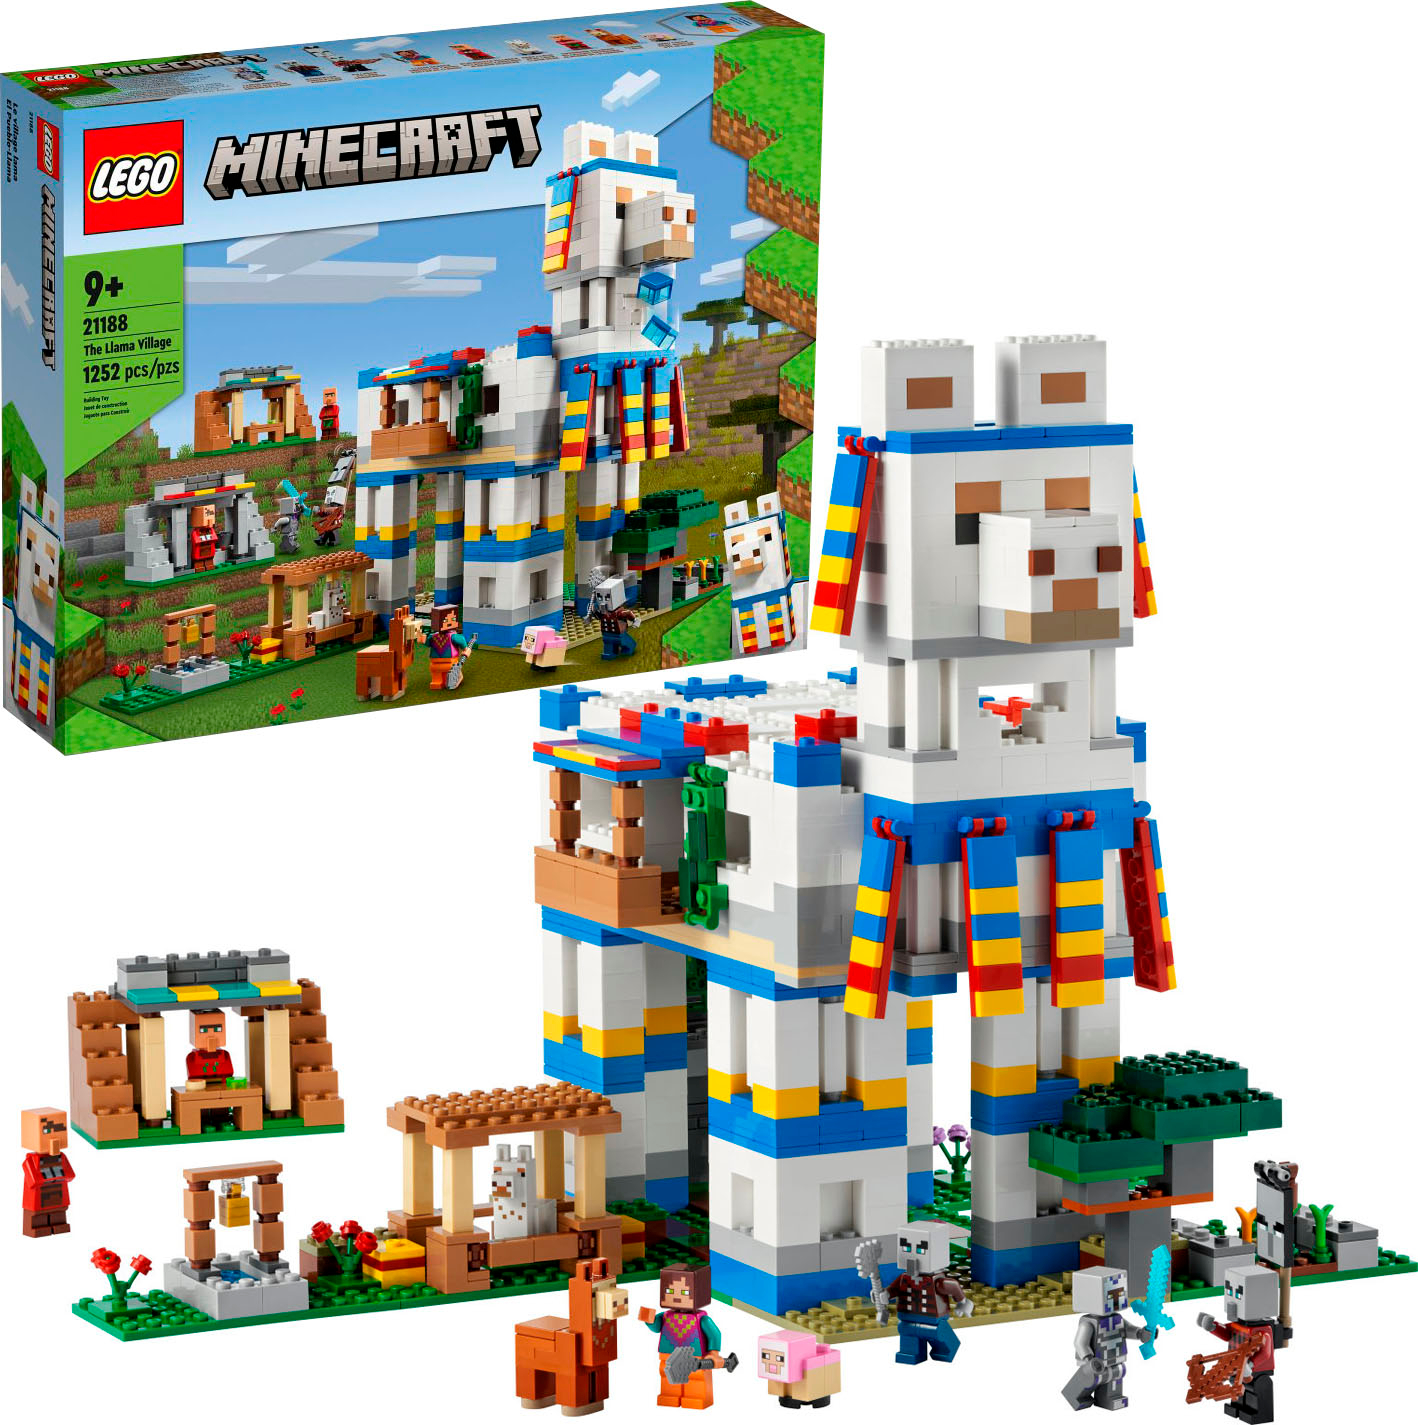 Minecraft The Llama Village 21188 - Best Buy